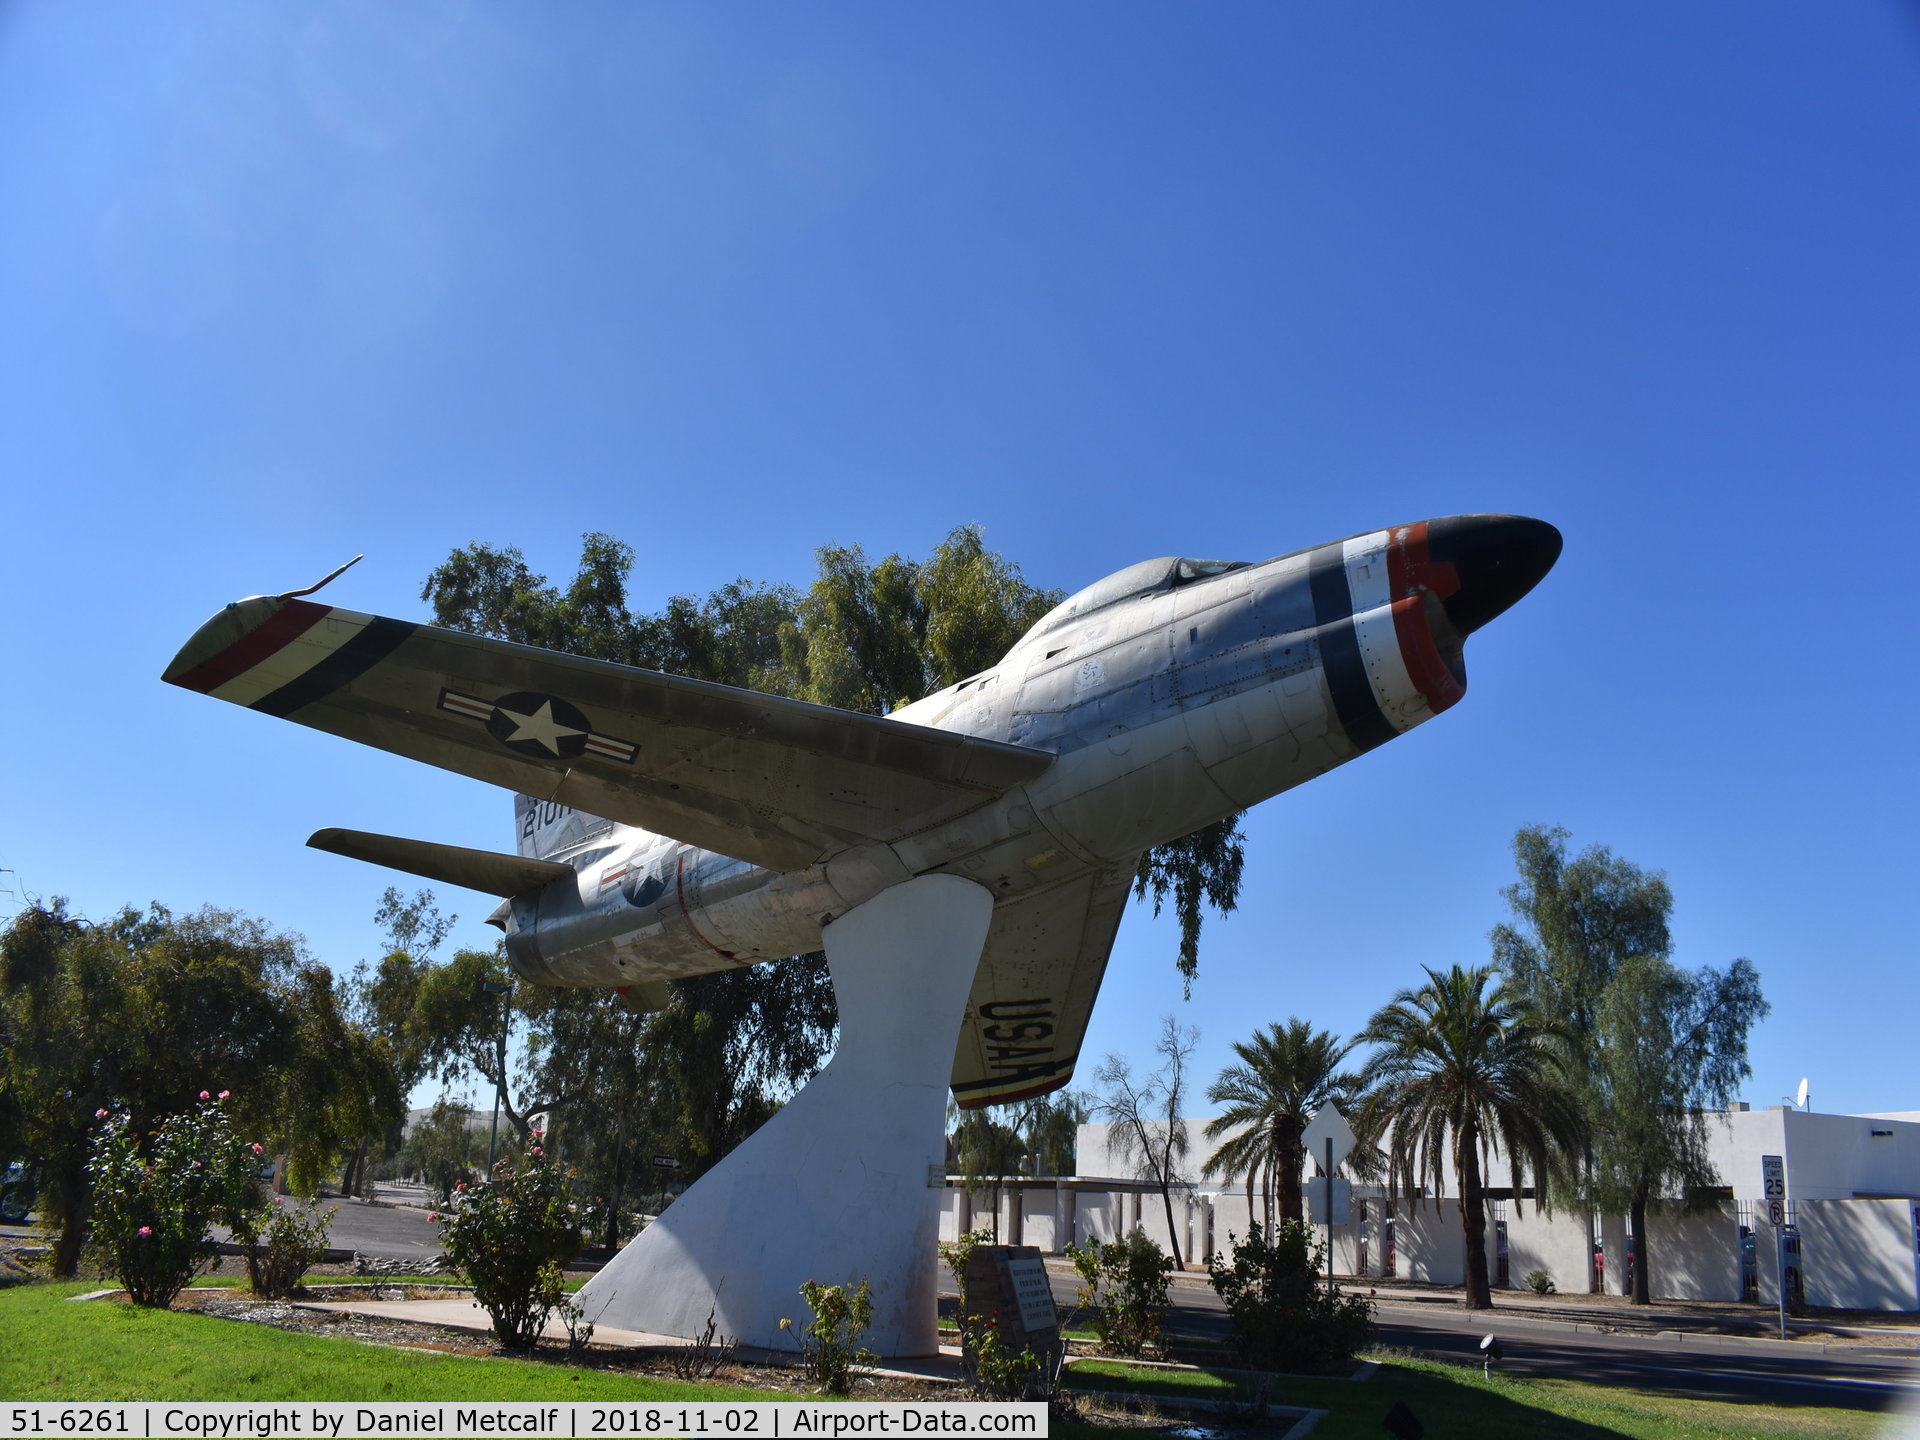 51-6261, 1951 North American F-86D Sabre C/N 173-405, Seen at Veterans Park in Chandler, AZ